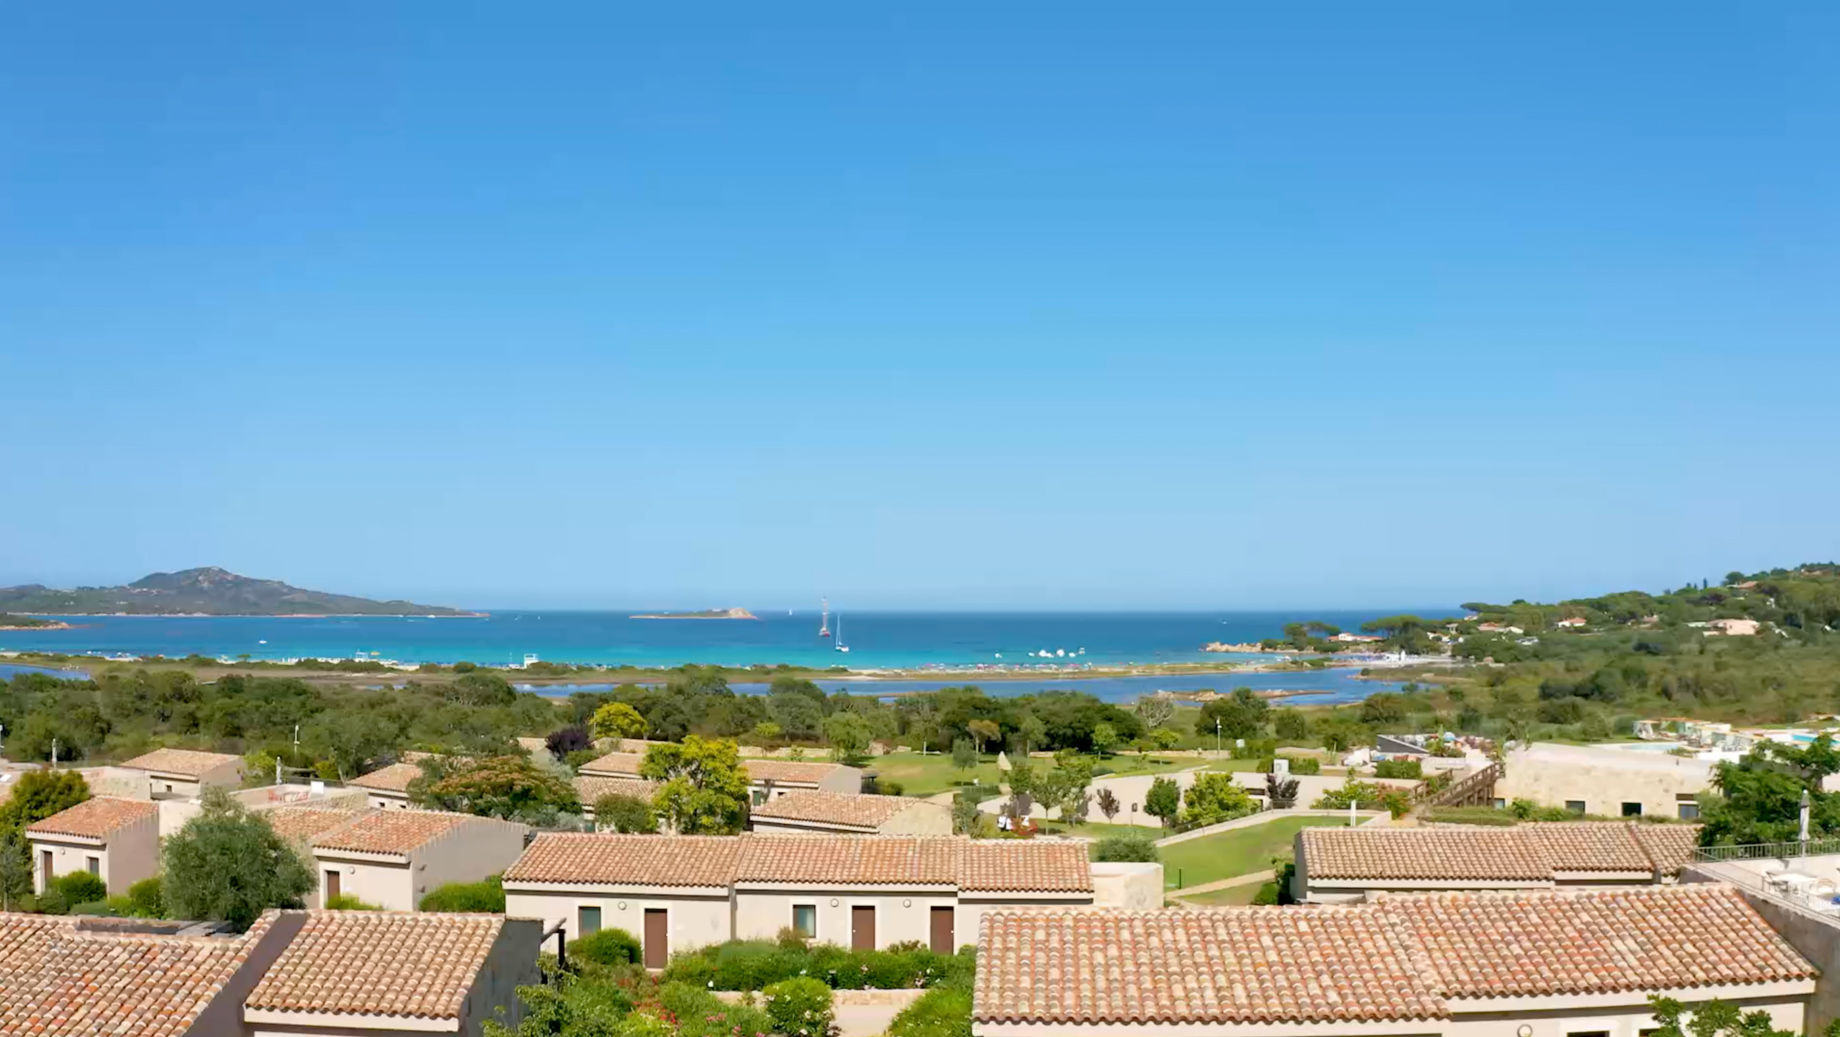 Baglioni Resort Sardinia – San Teodoro, Sardegna, Italy – Beach View